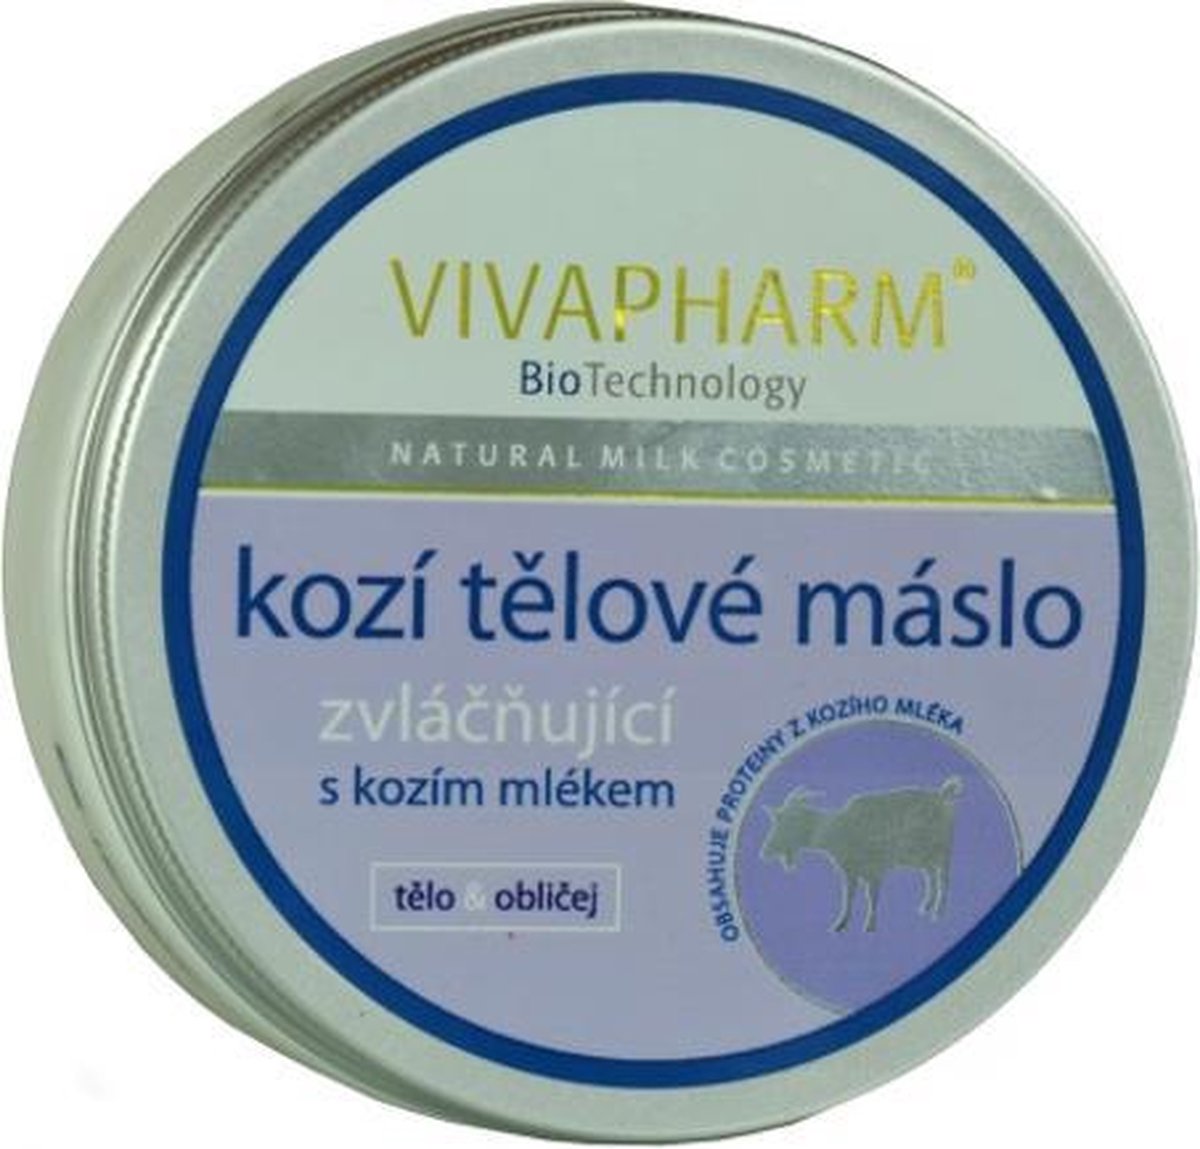 VIVAPHARM® Body Butter met Geitenmelk - 200ml